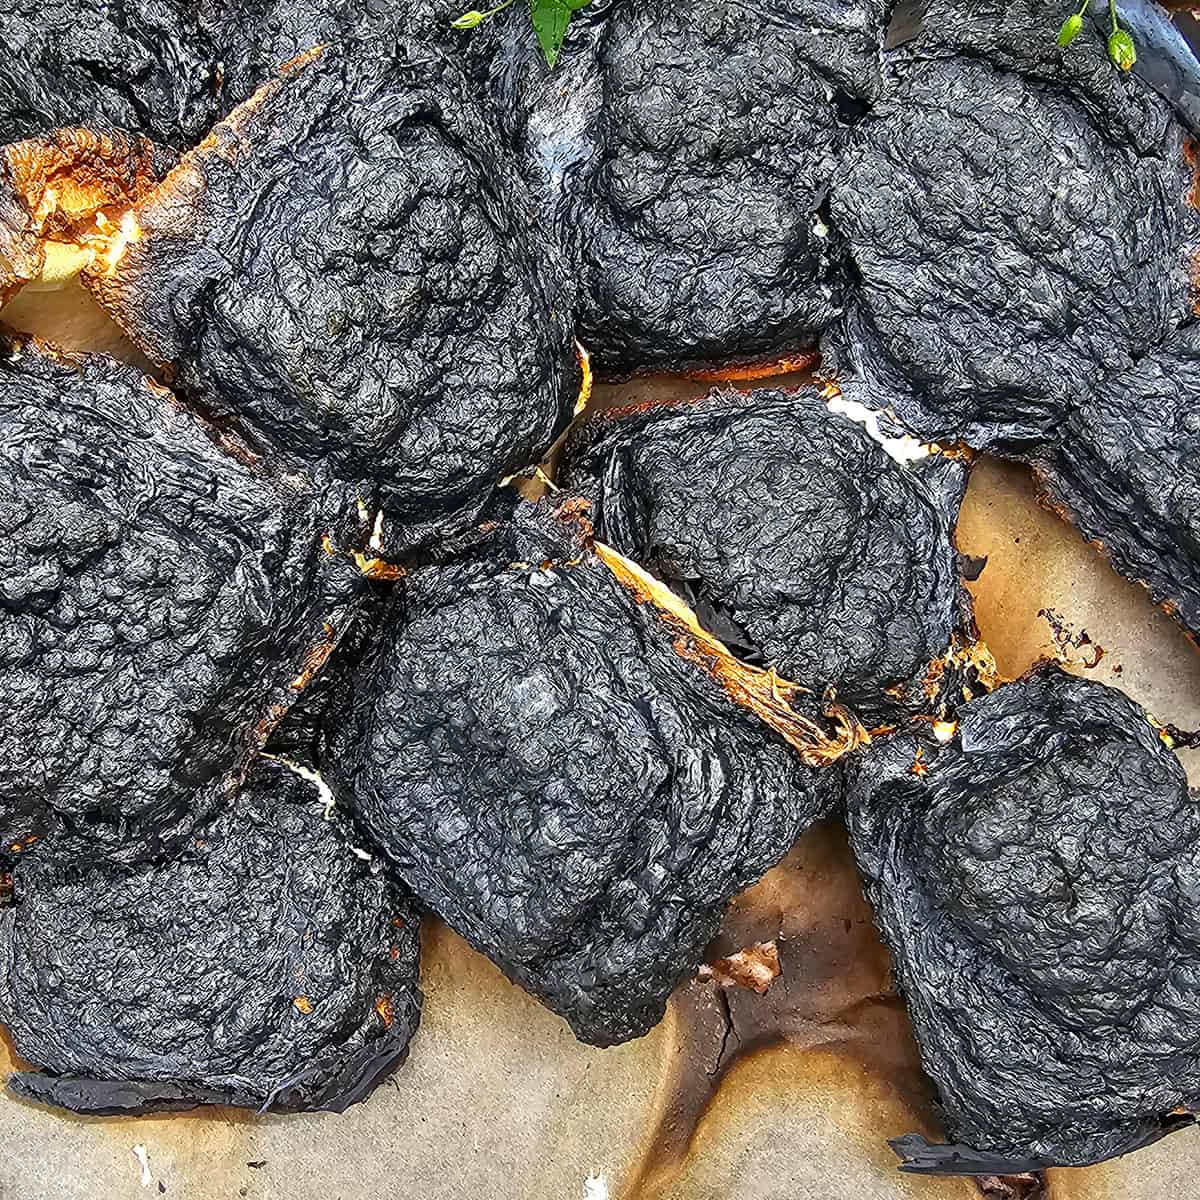 A tray of burned roasted marshmallows.